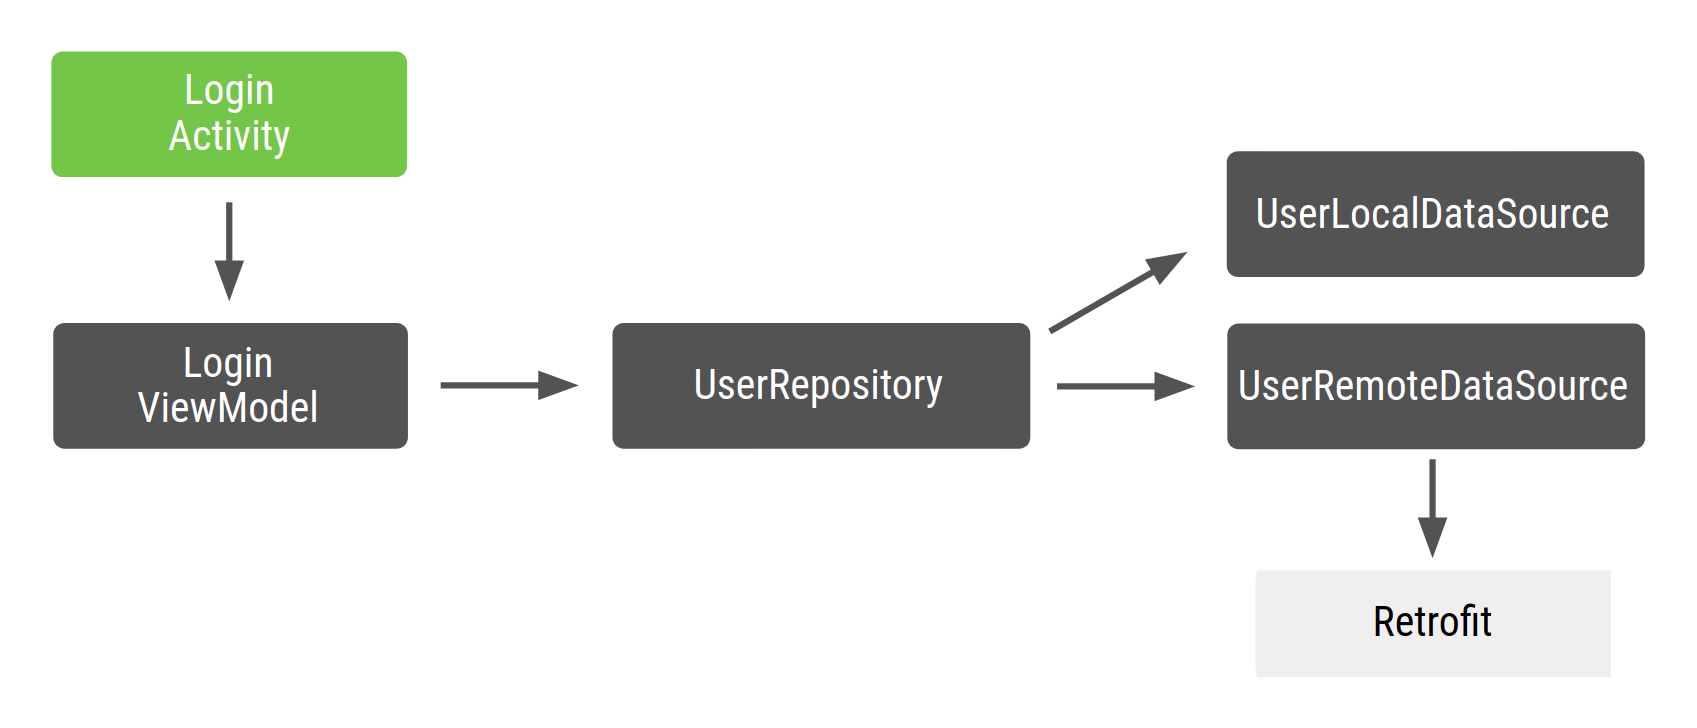 LoginActivity dipende da LoginViewModel, che dipende da UserRepository, che a sua volta dipende da UserLocalDataSource e UserRemoteDataSource, che a sua volta dipende da Retrofit.